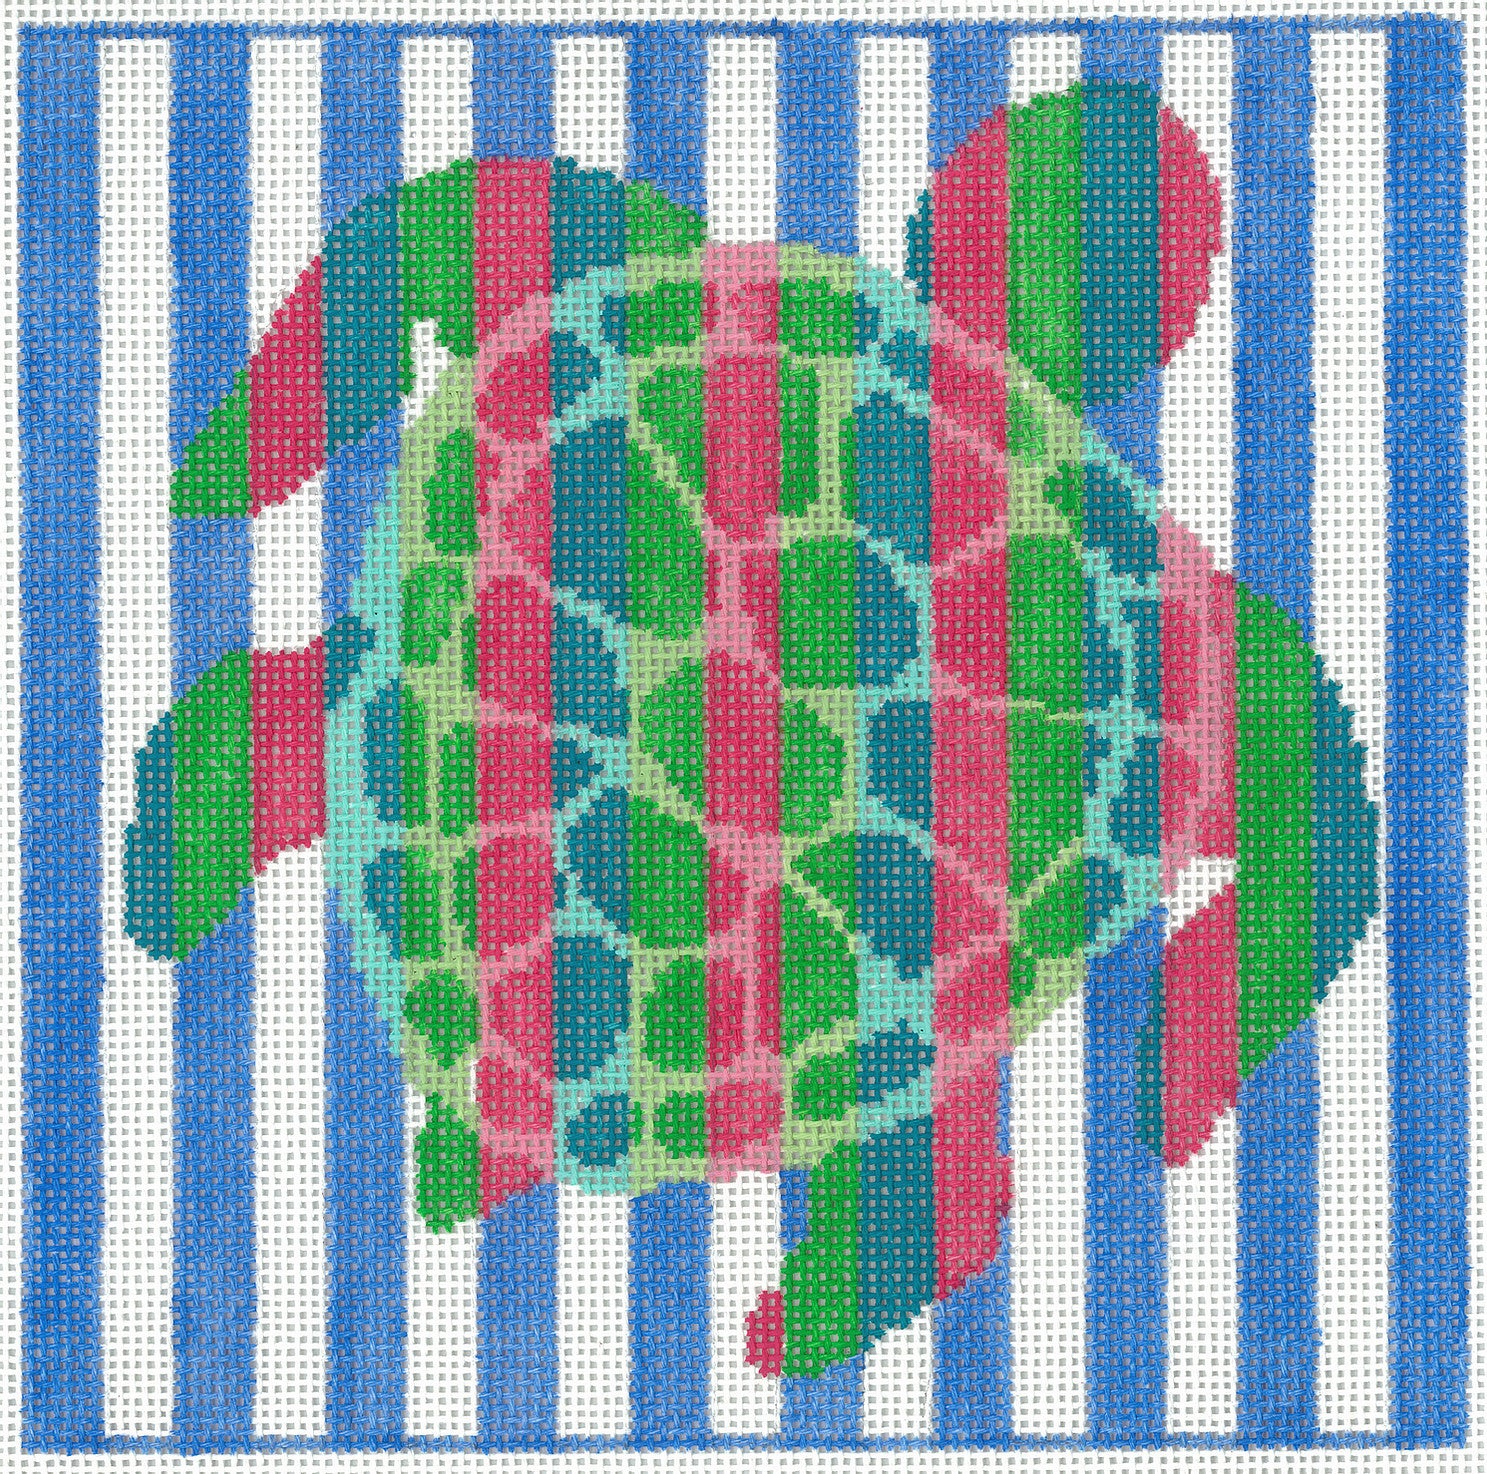 Two Sisters NPSQ 09 Turtle Square 14 mesh 8x8